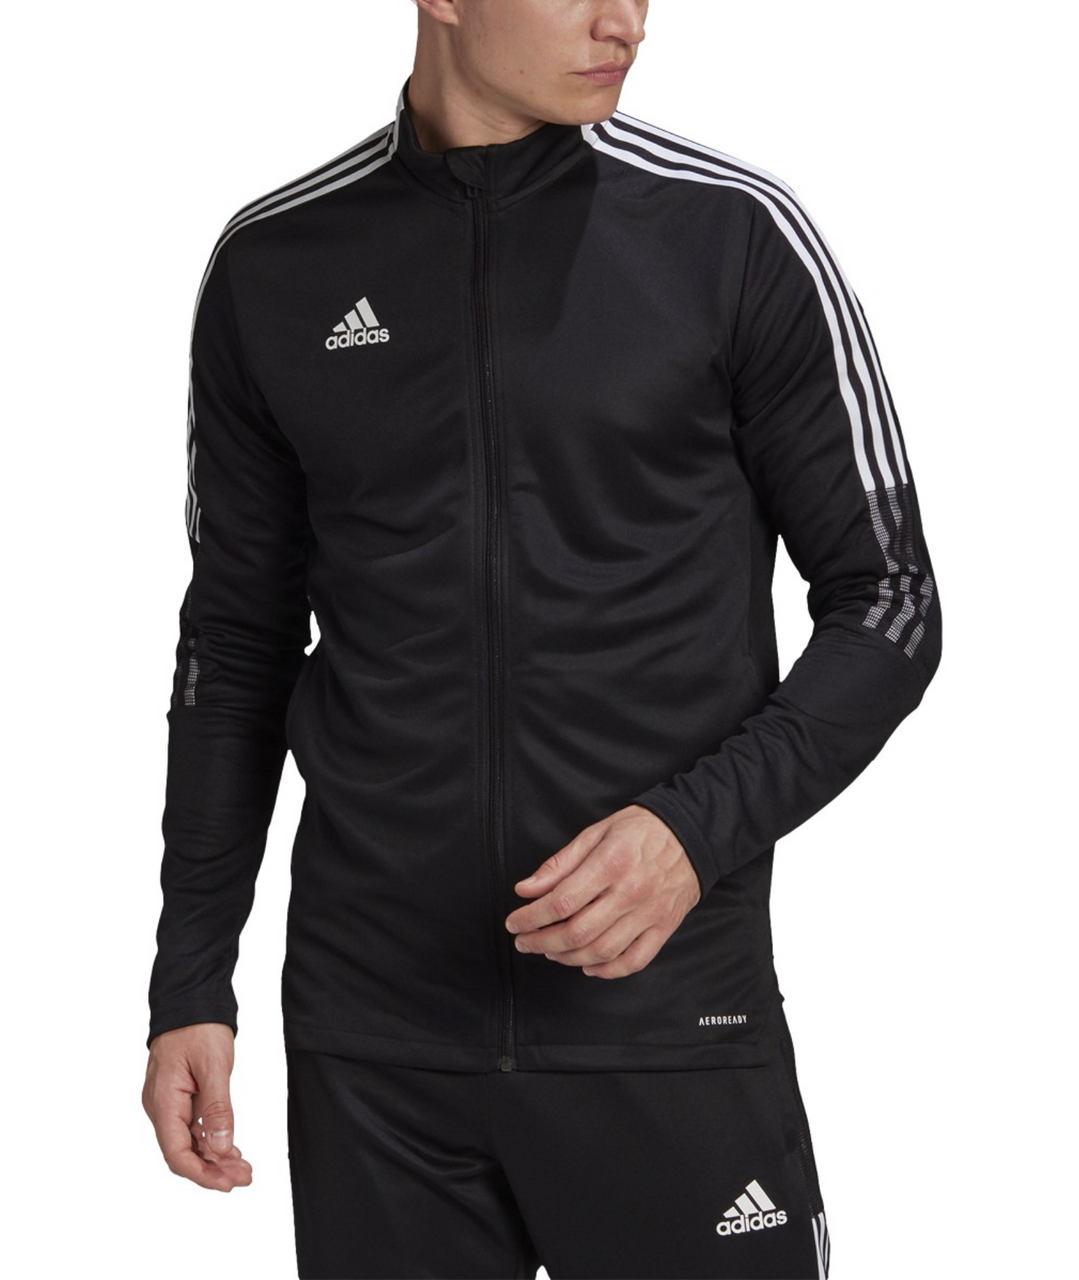 Somers Youth Soccer Adidas Tiro 21 Track Jacket Black - DK\'s Hockey Shop